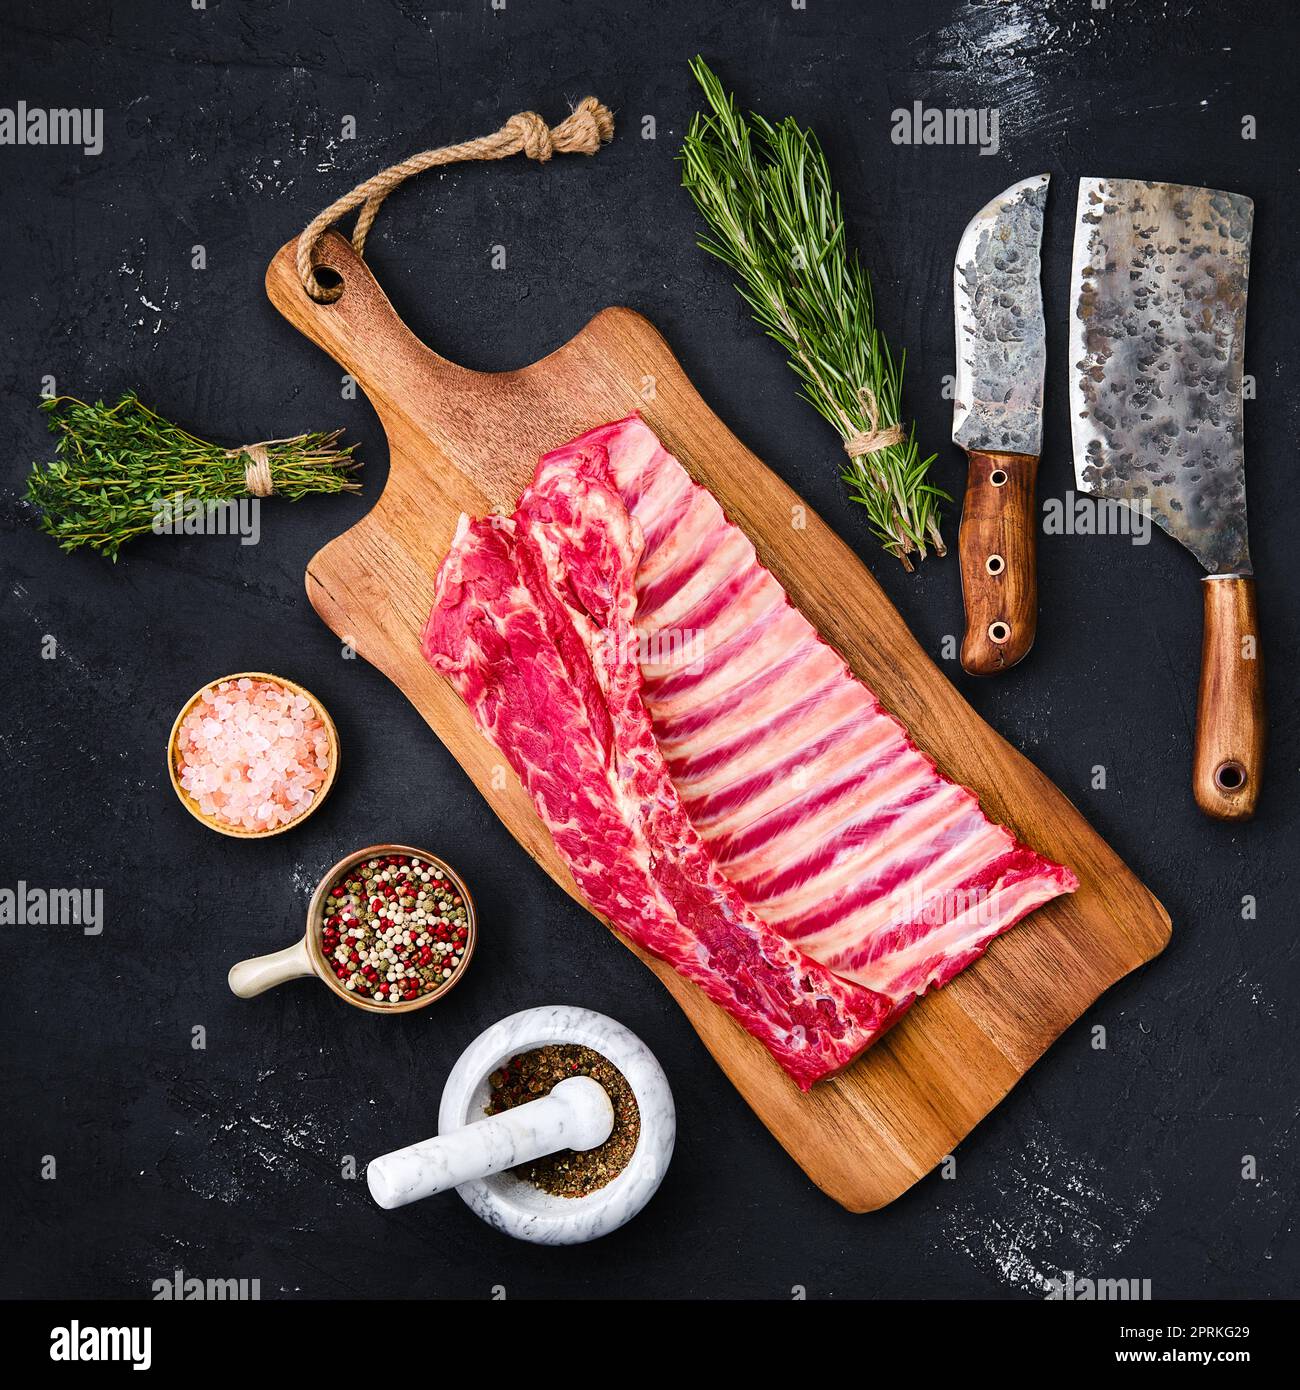 https://c8.alamy.com/comp/2PRKG29/fresh-raw-rack-of-lamb-on-wooden-cutting-board-with-herbs-and-seasoning-2PRKG29.jpg